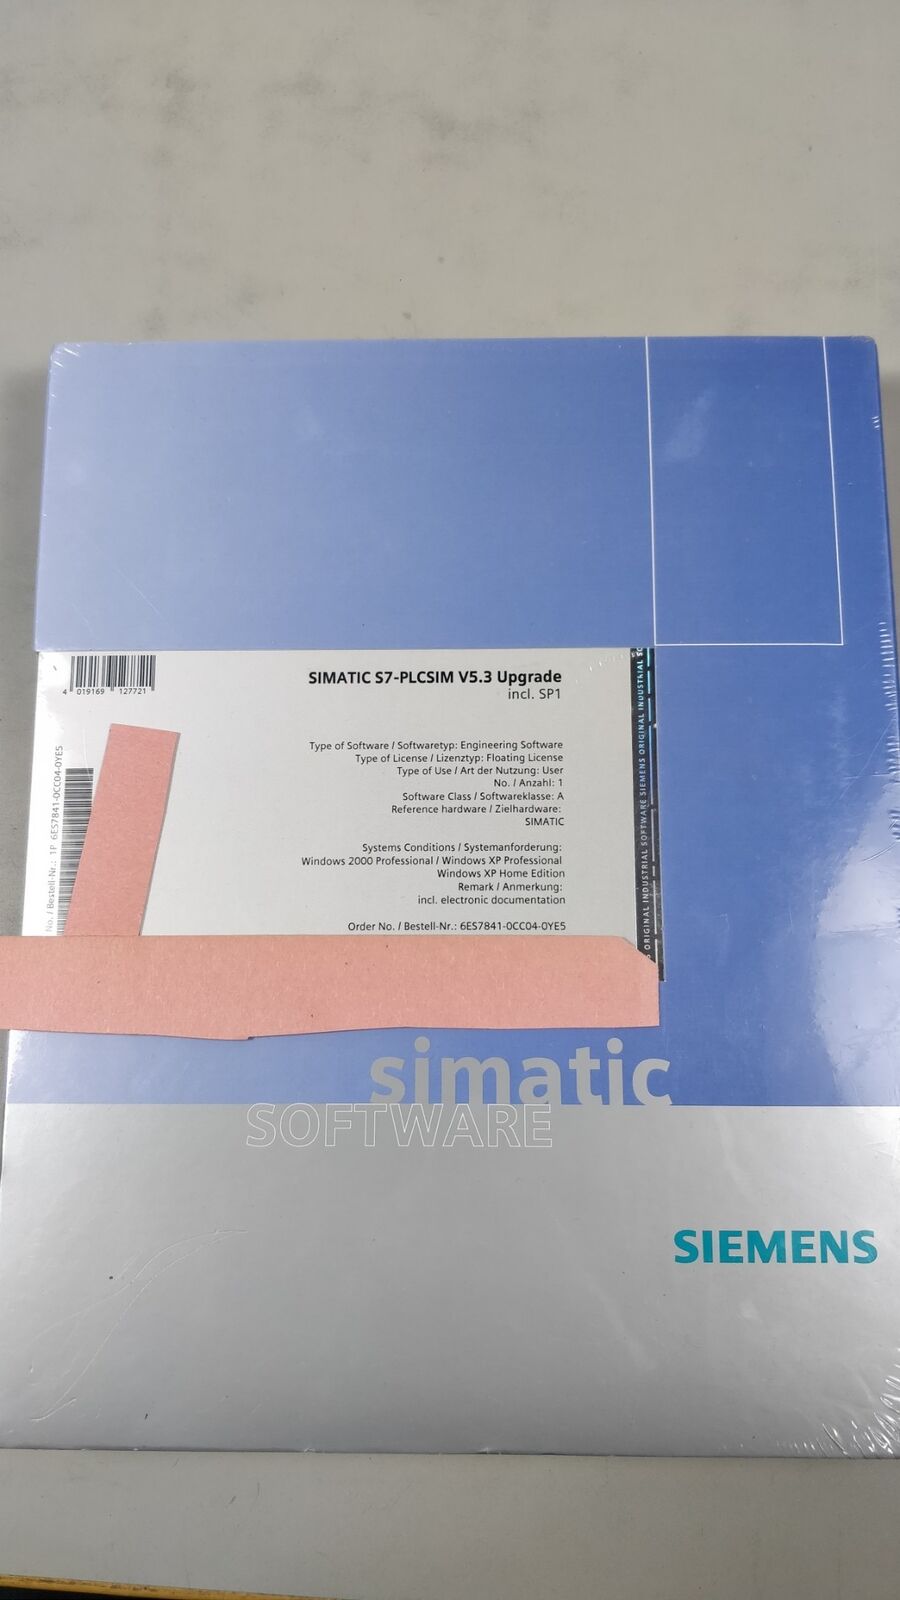 Siemens 6ES7841-0CC04-0YE5 Simatic S7, Step 7 V5.3 Upgrade